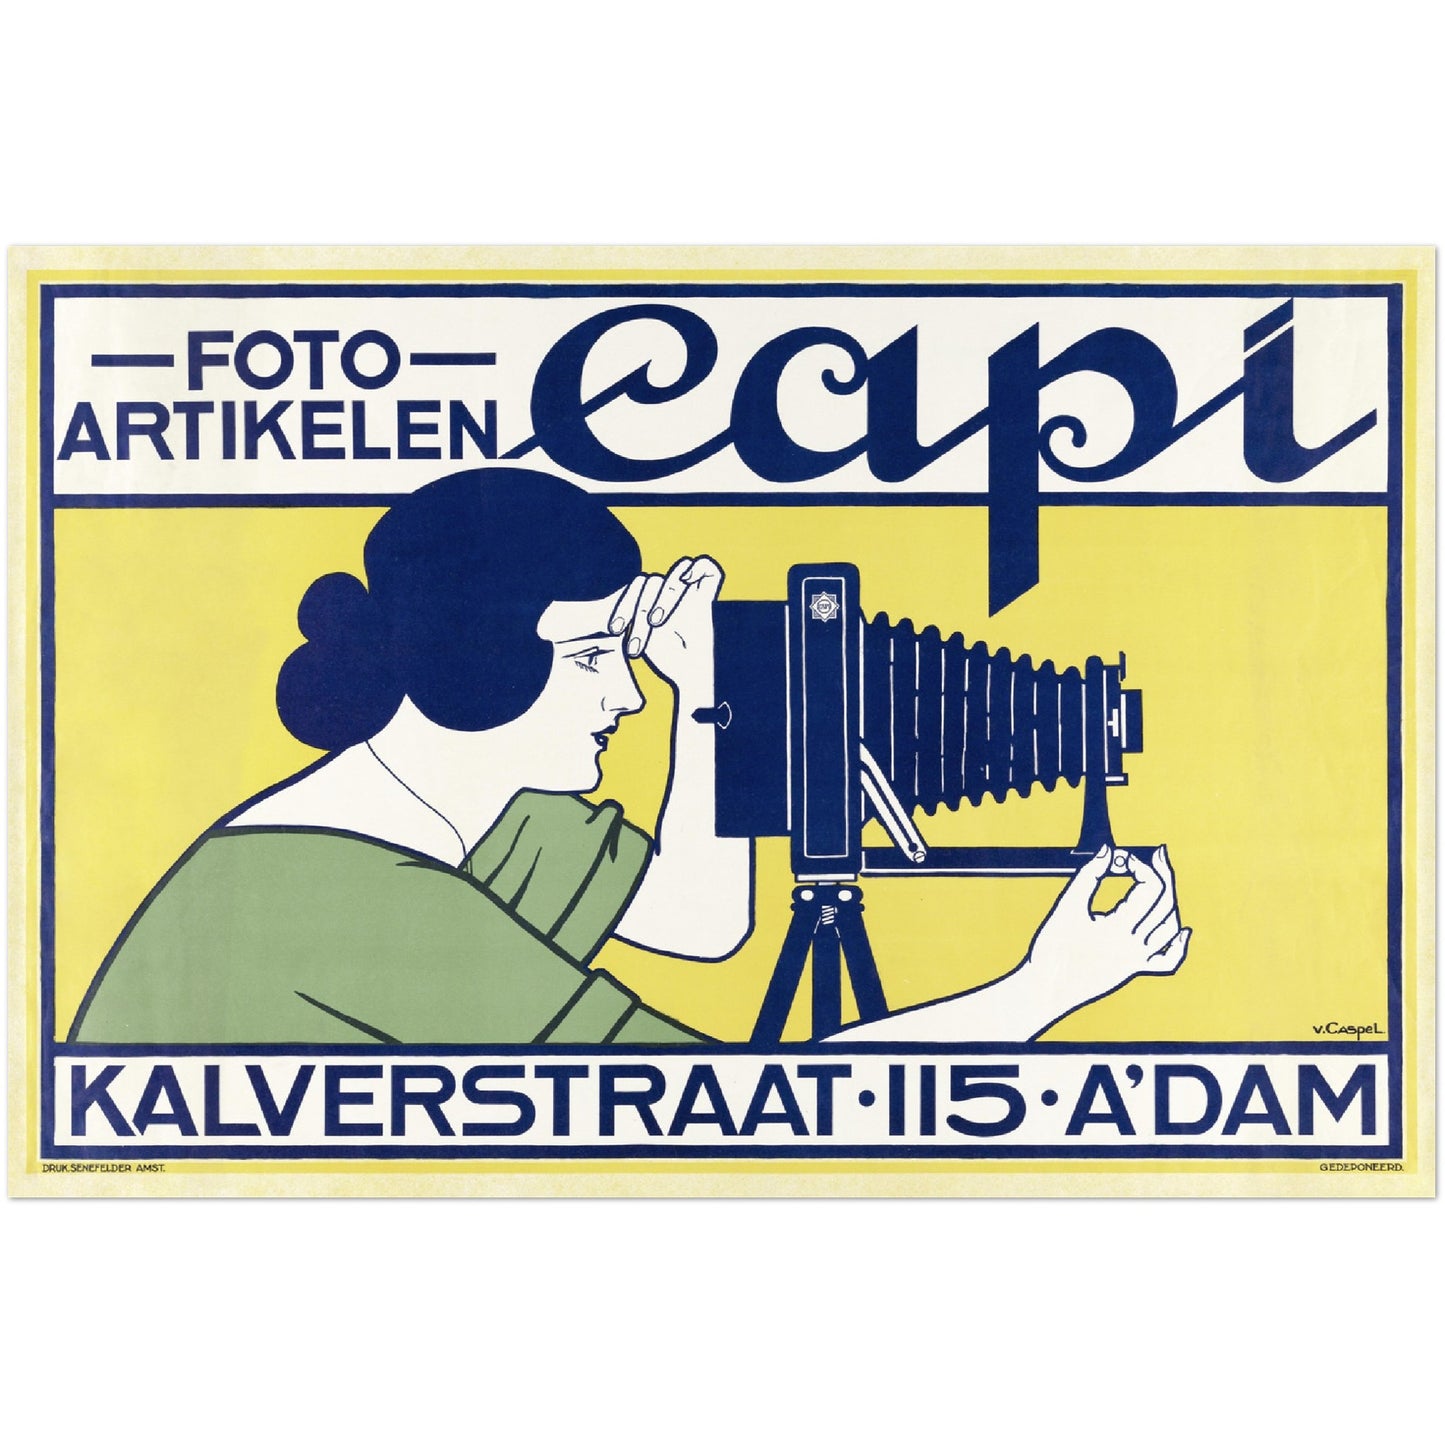 Plakat - Retro - Fotoartiklen Capi; Kalverstraat 115 Amsterdam - Johann Georg van Caspel